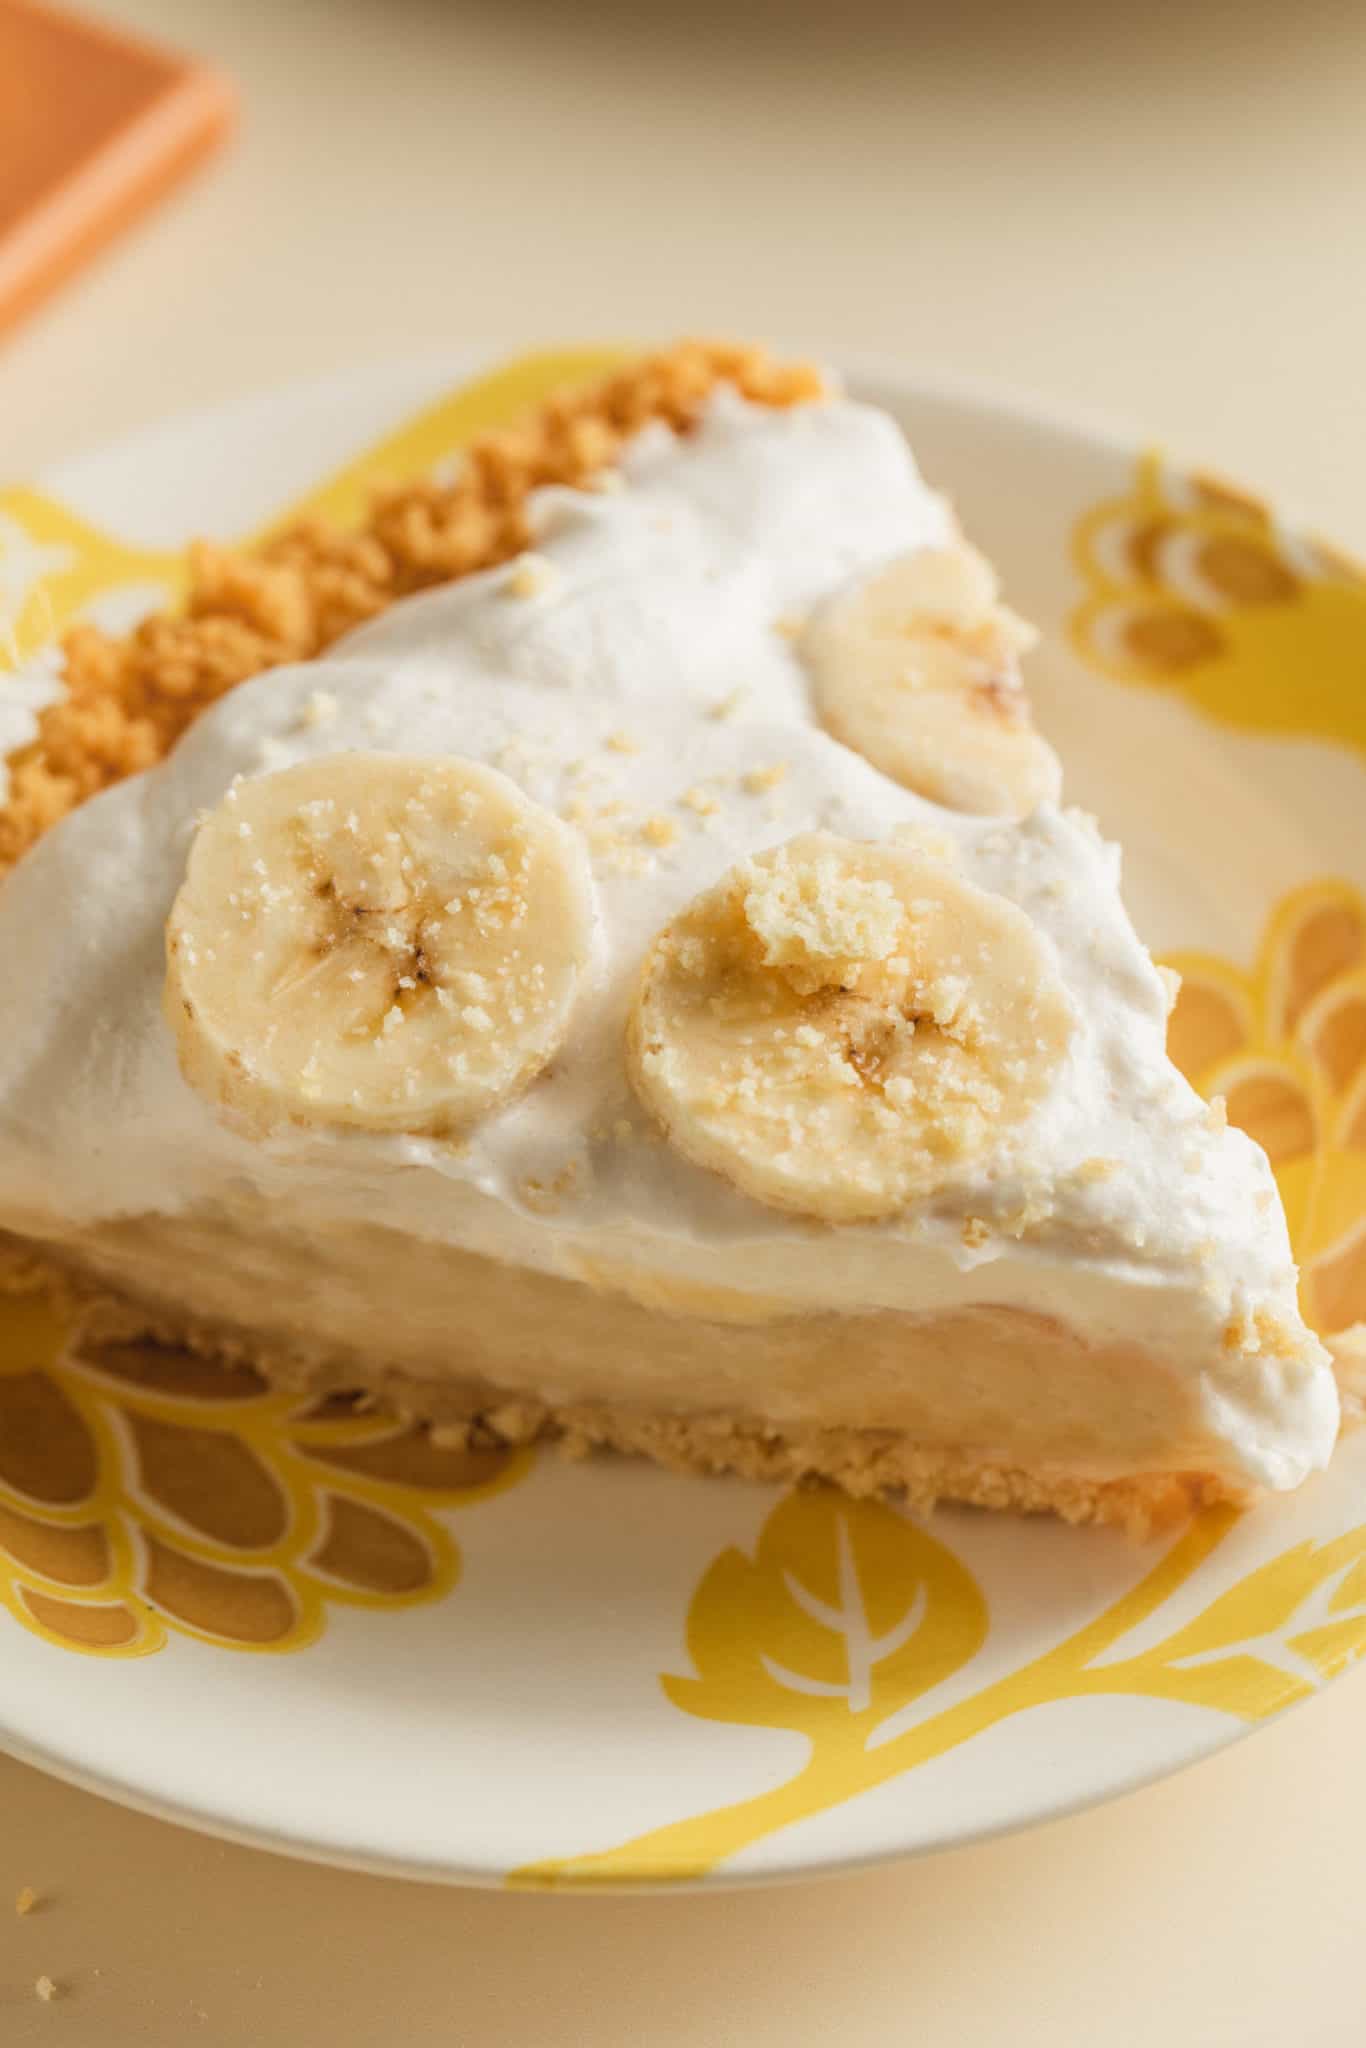 A big slice of vegan banana cream pie recipe made gluten free.